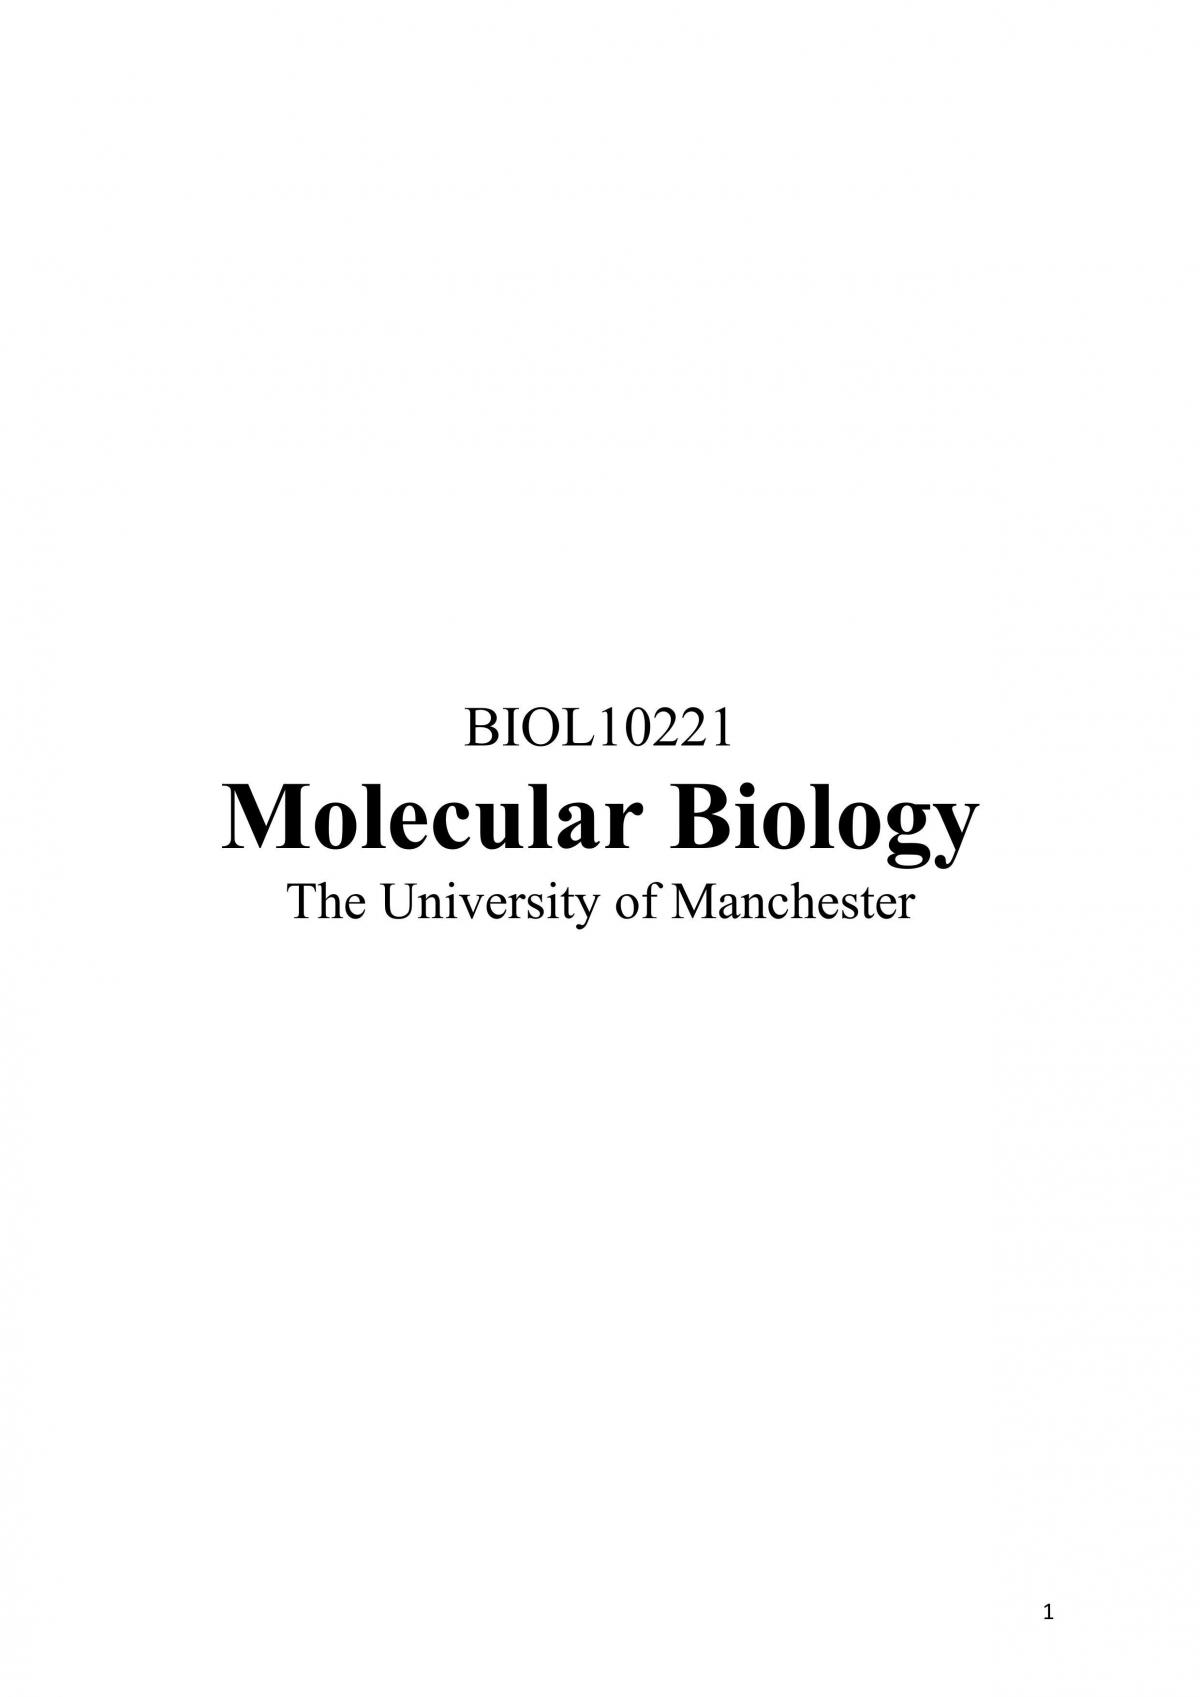 Molecular biology notes  - Page 1